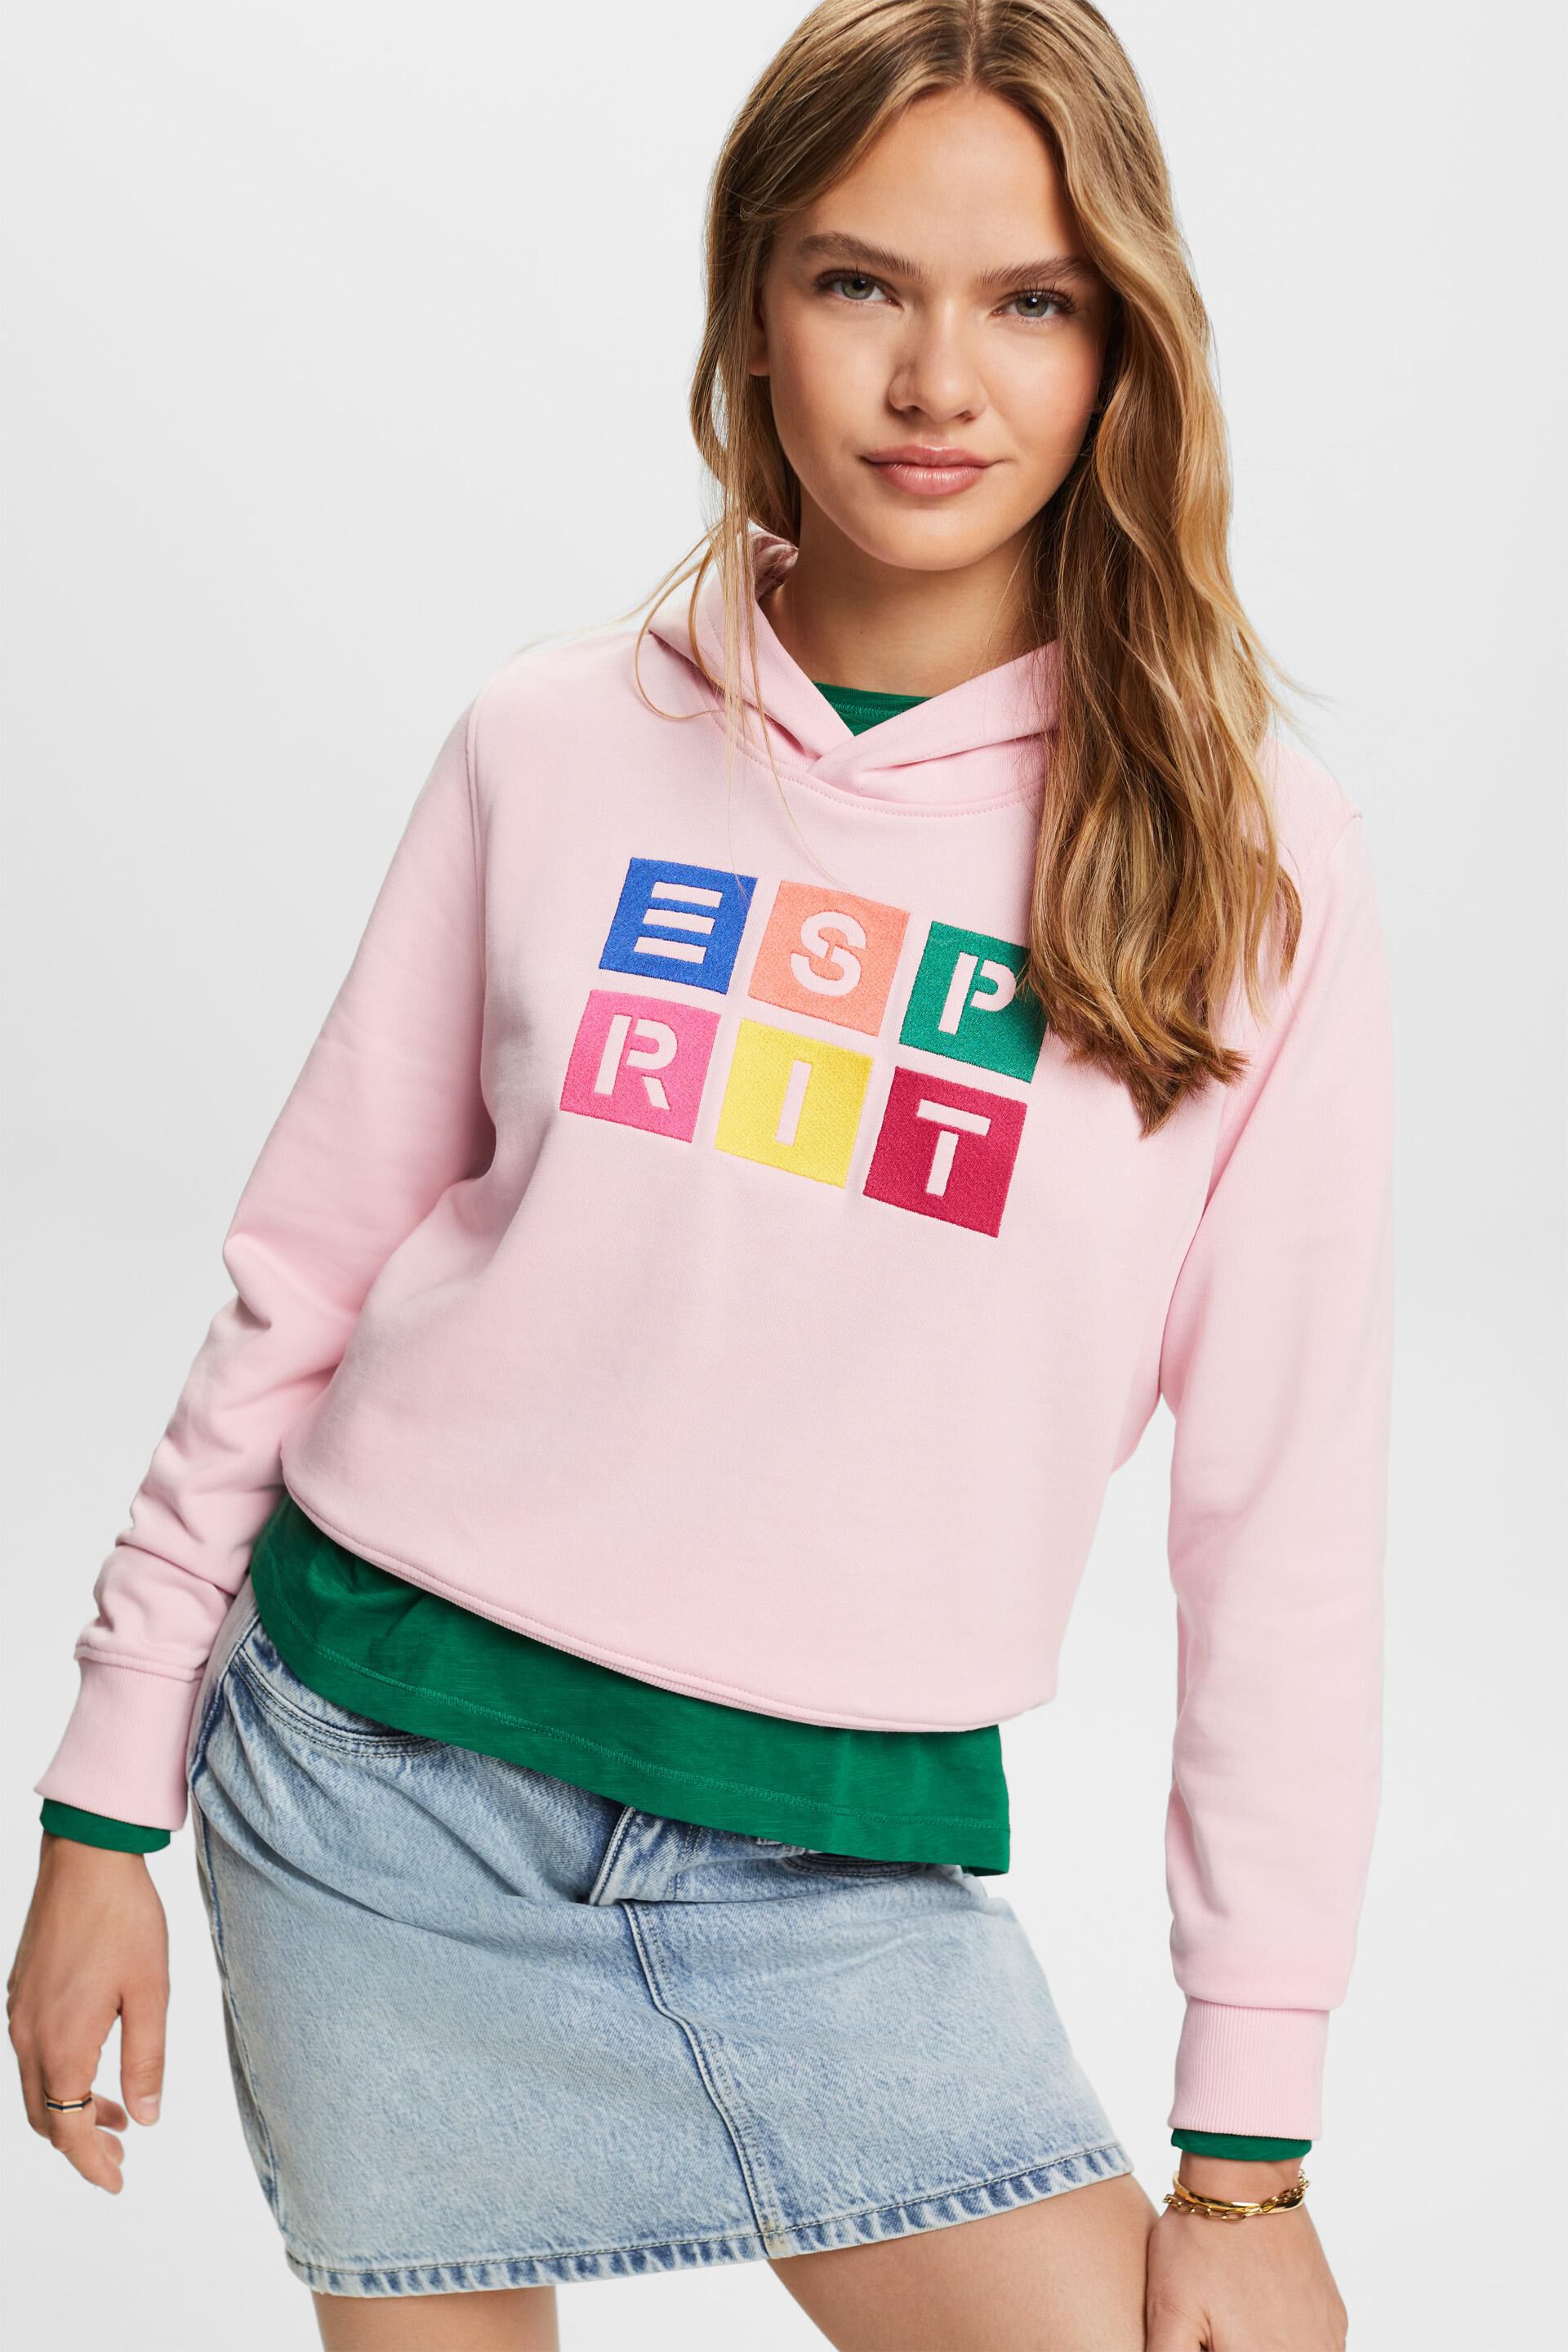 Esprit hoodie, cotton Embroidered logo organic